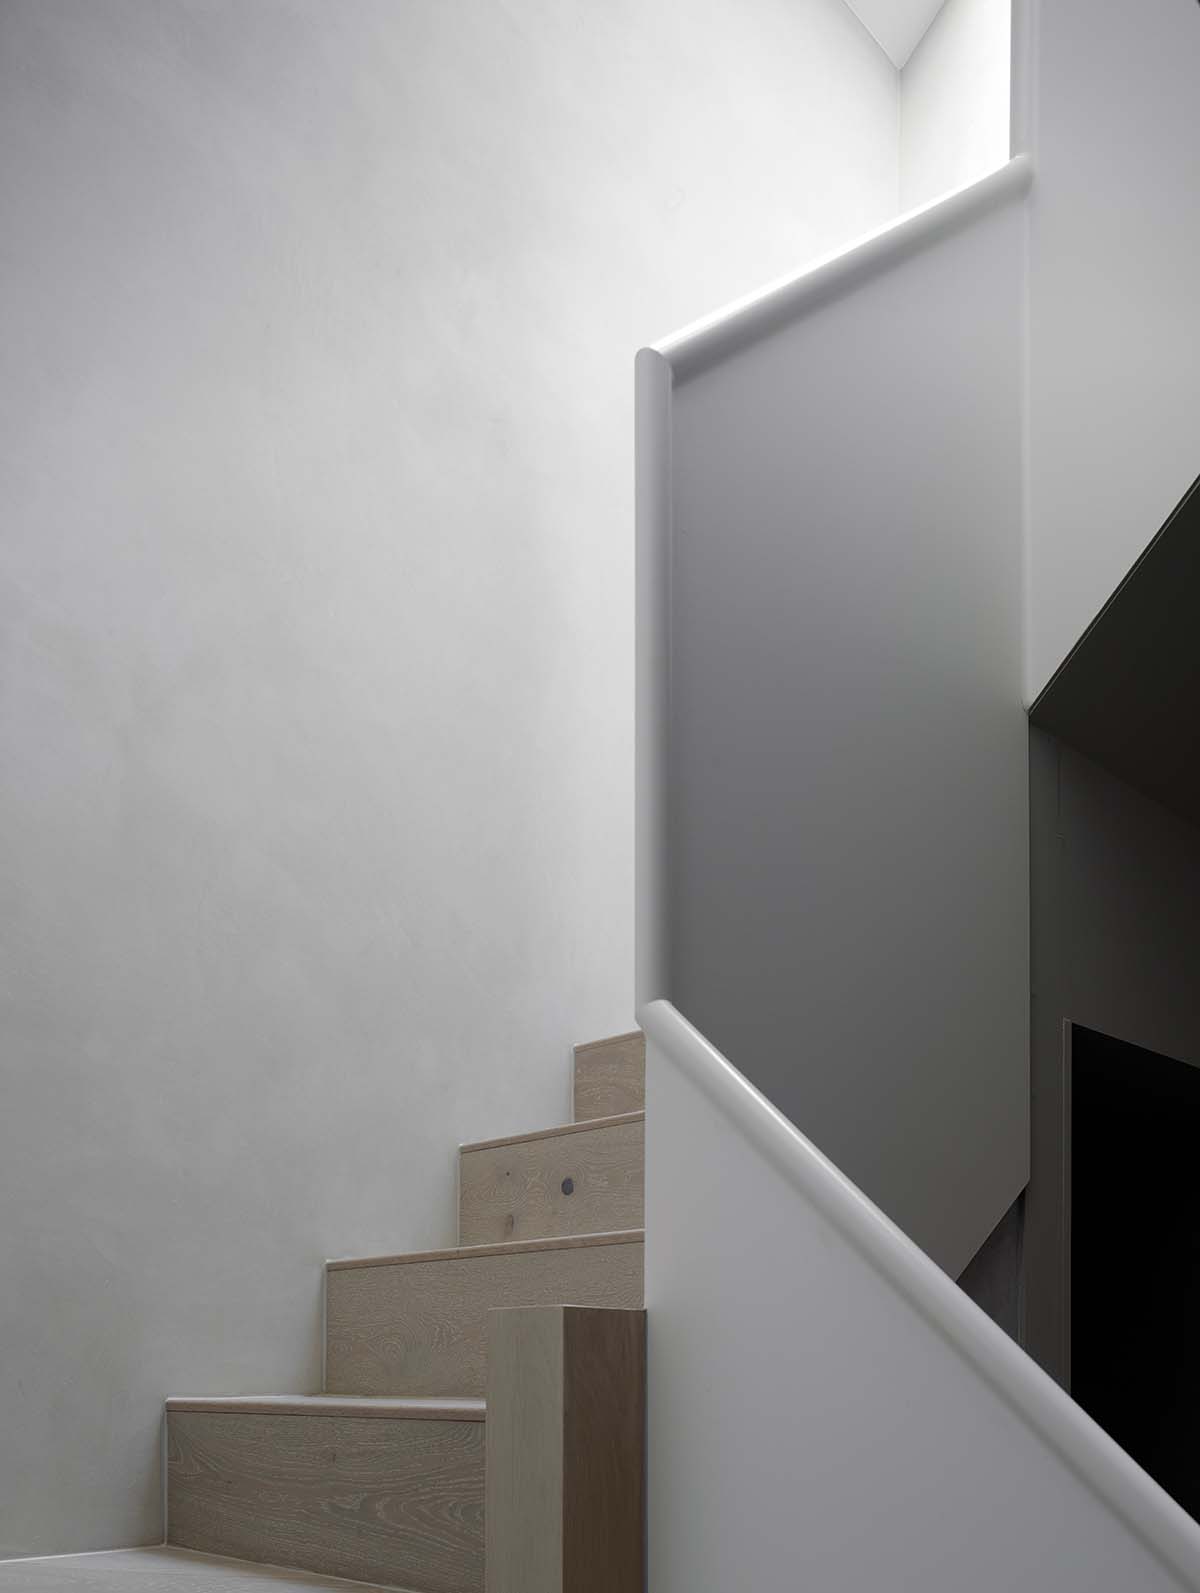 Stair balustrade by Scaranish